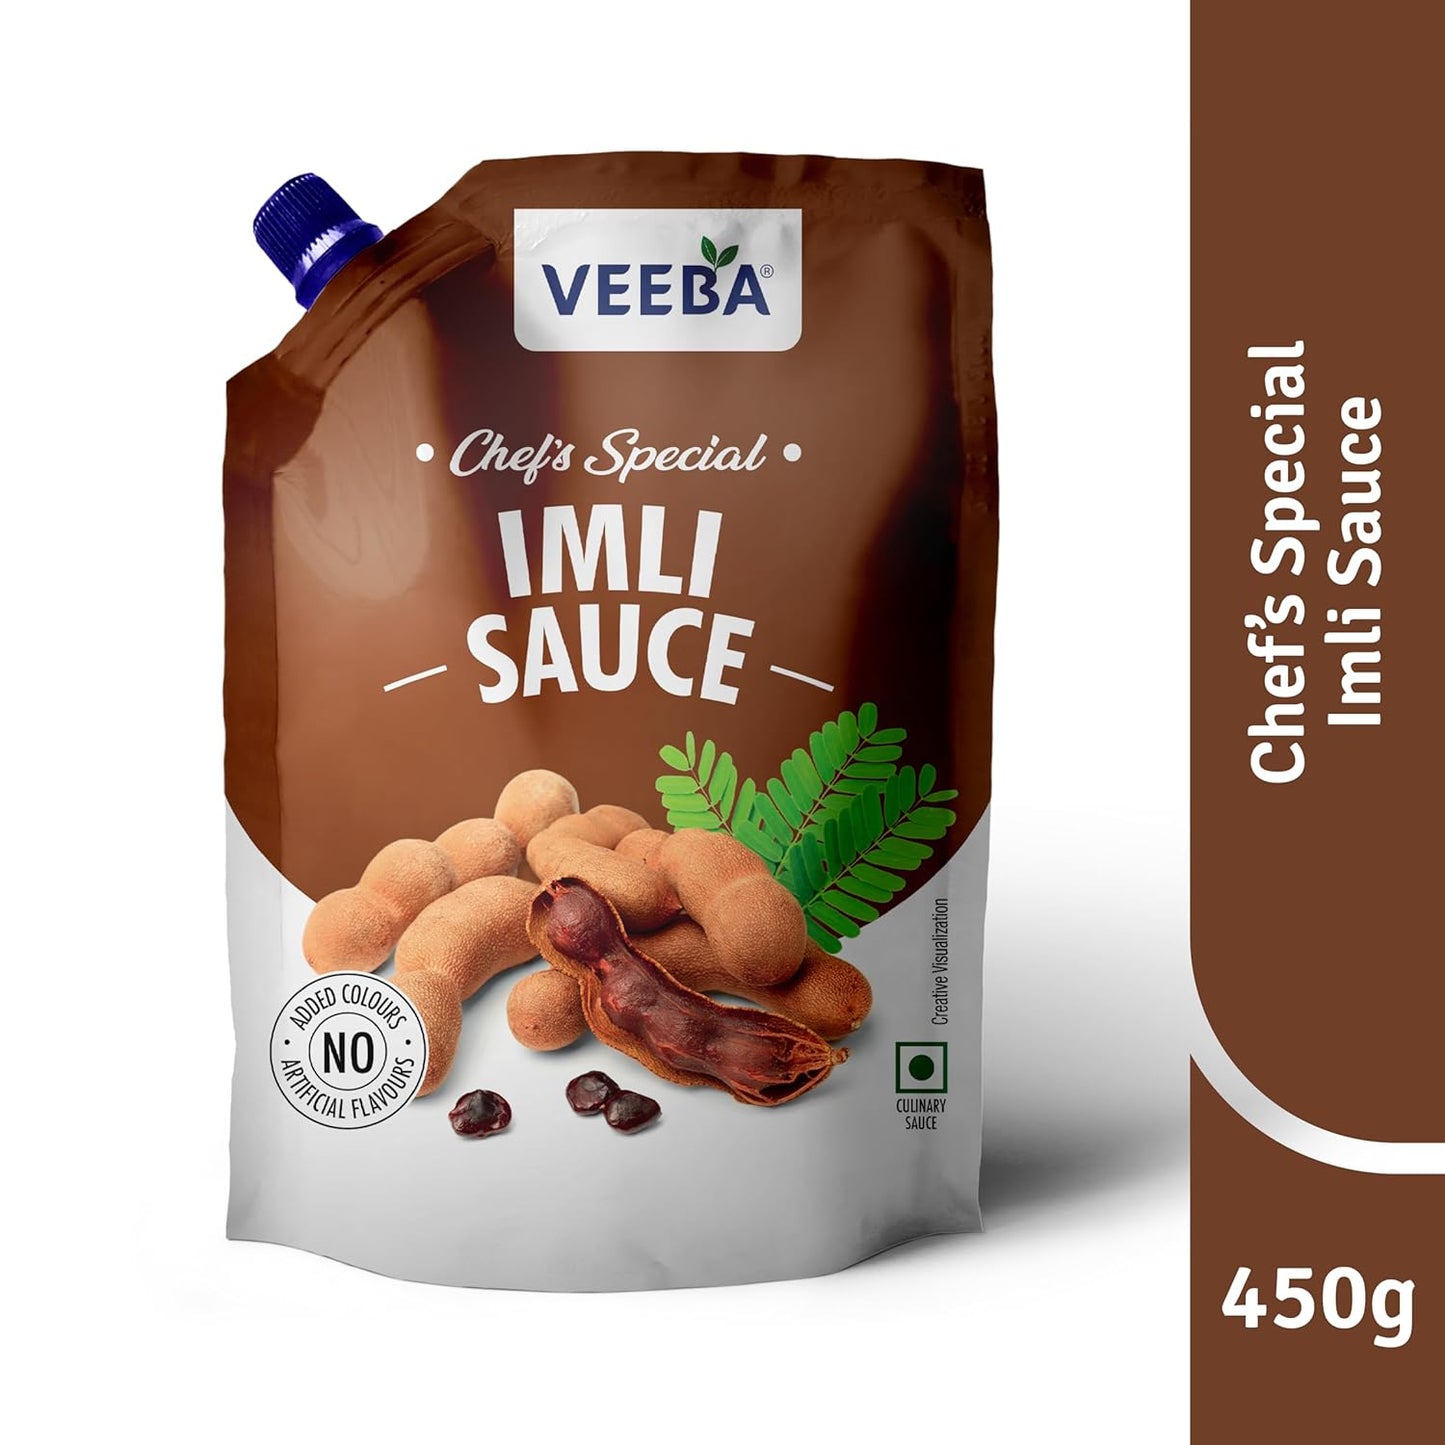 Veeba/ Chef's Special/ Imli Sauce(450gm)